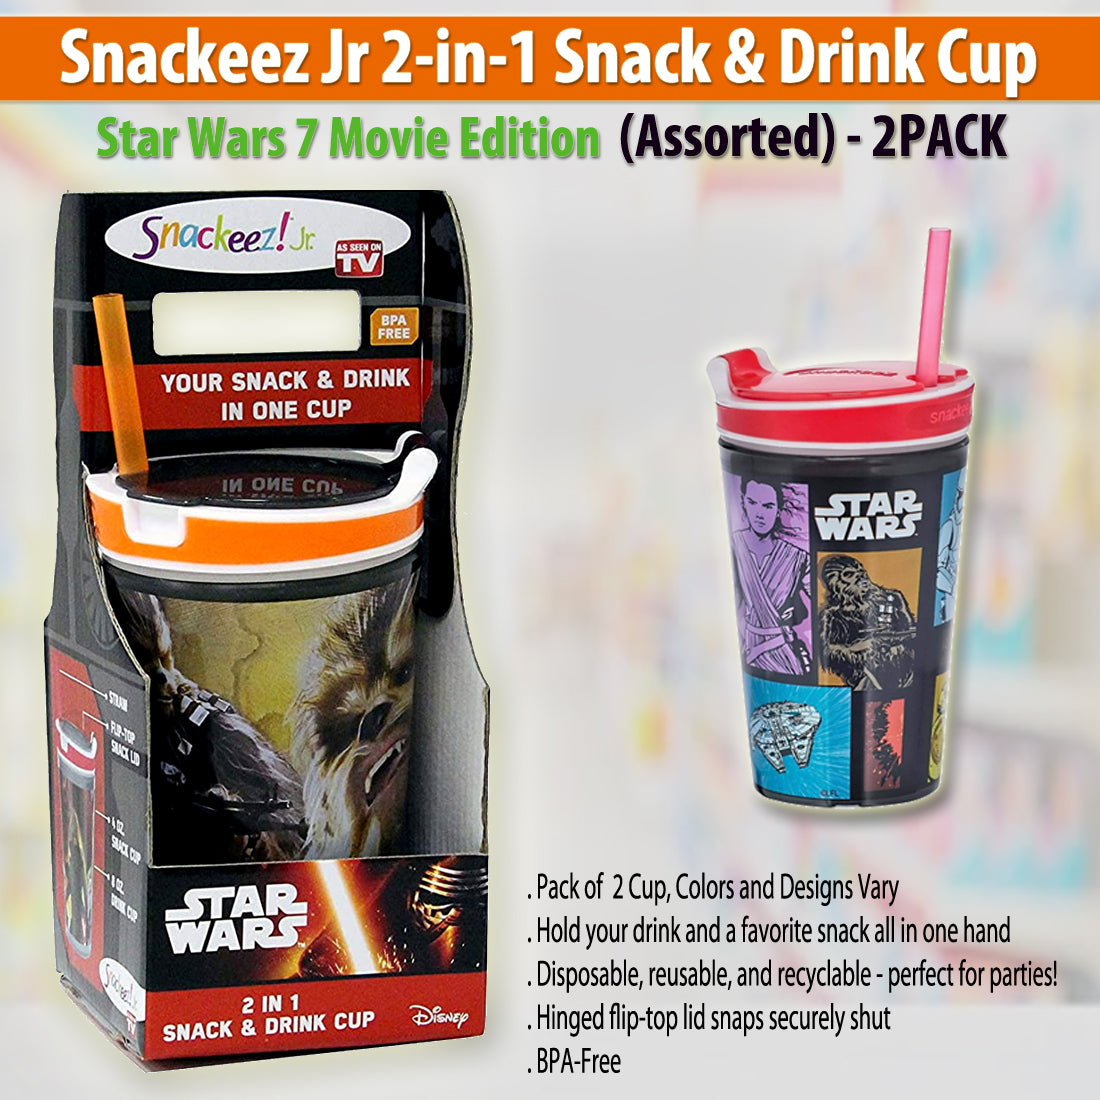 Snackeez Jr 2In1 Snack & Drink Cup Star Wars 7 Movie Edition